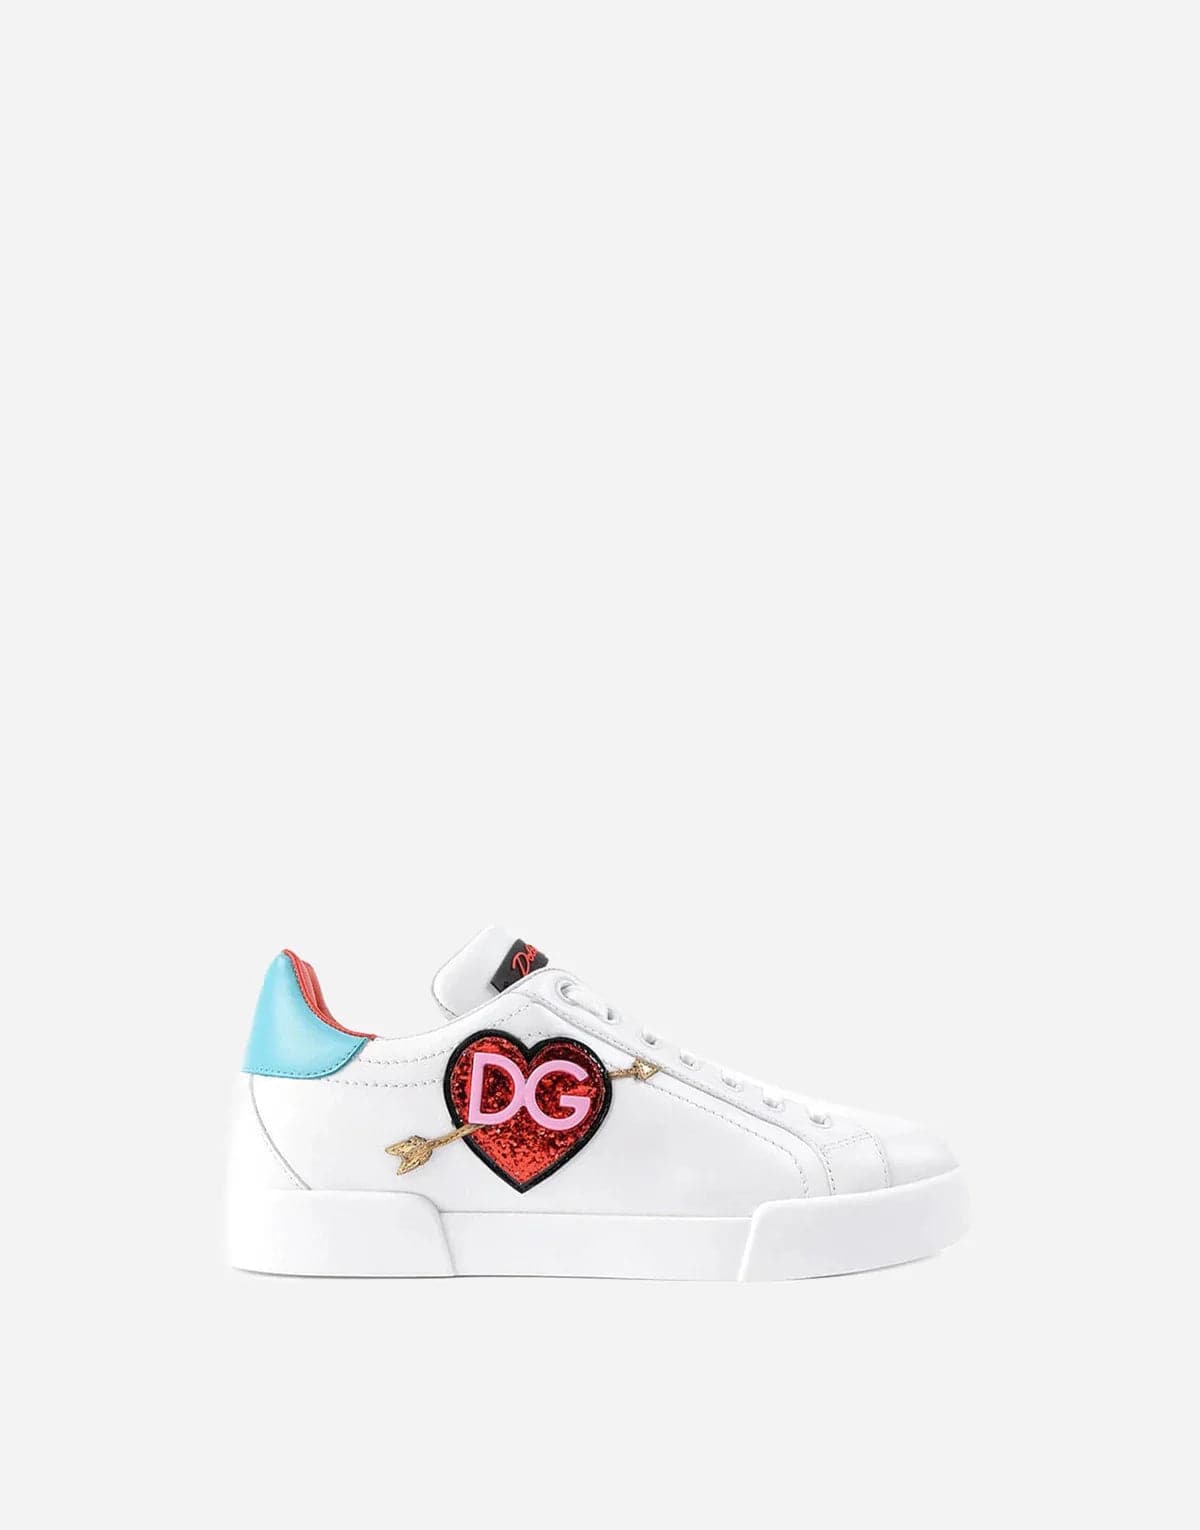 DG Heart Portofino Sneakers